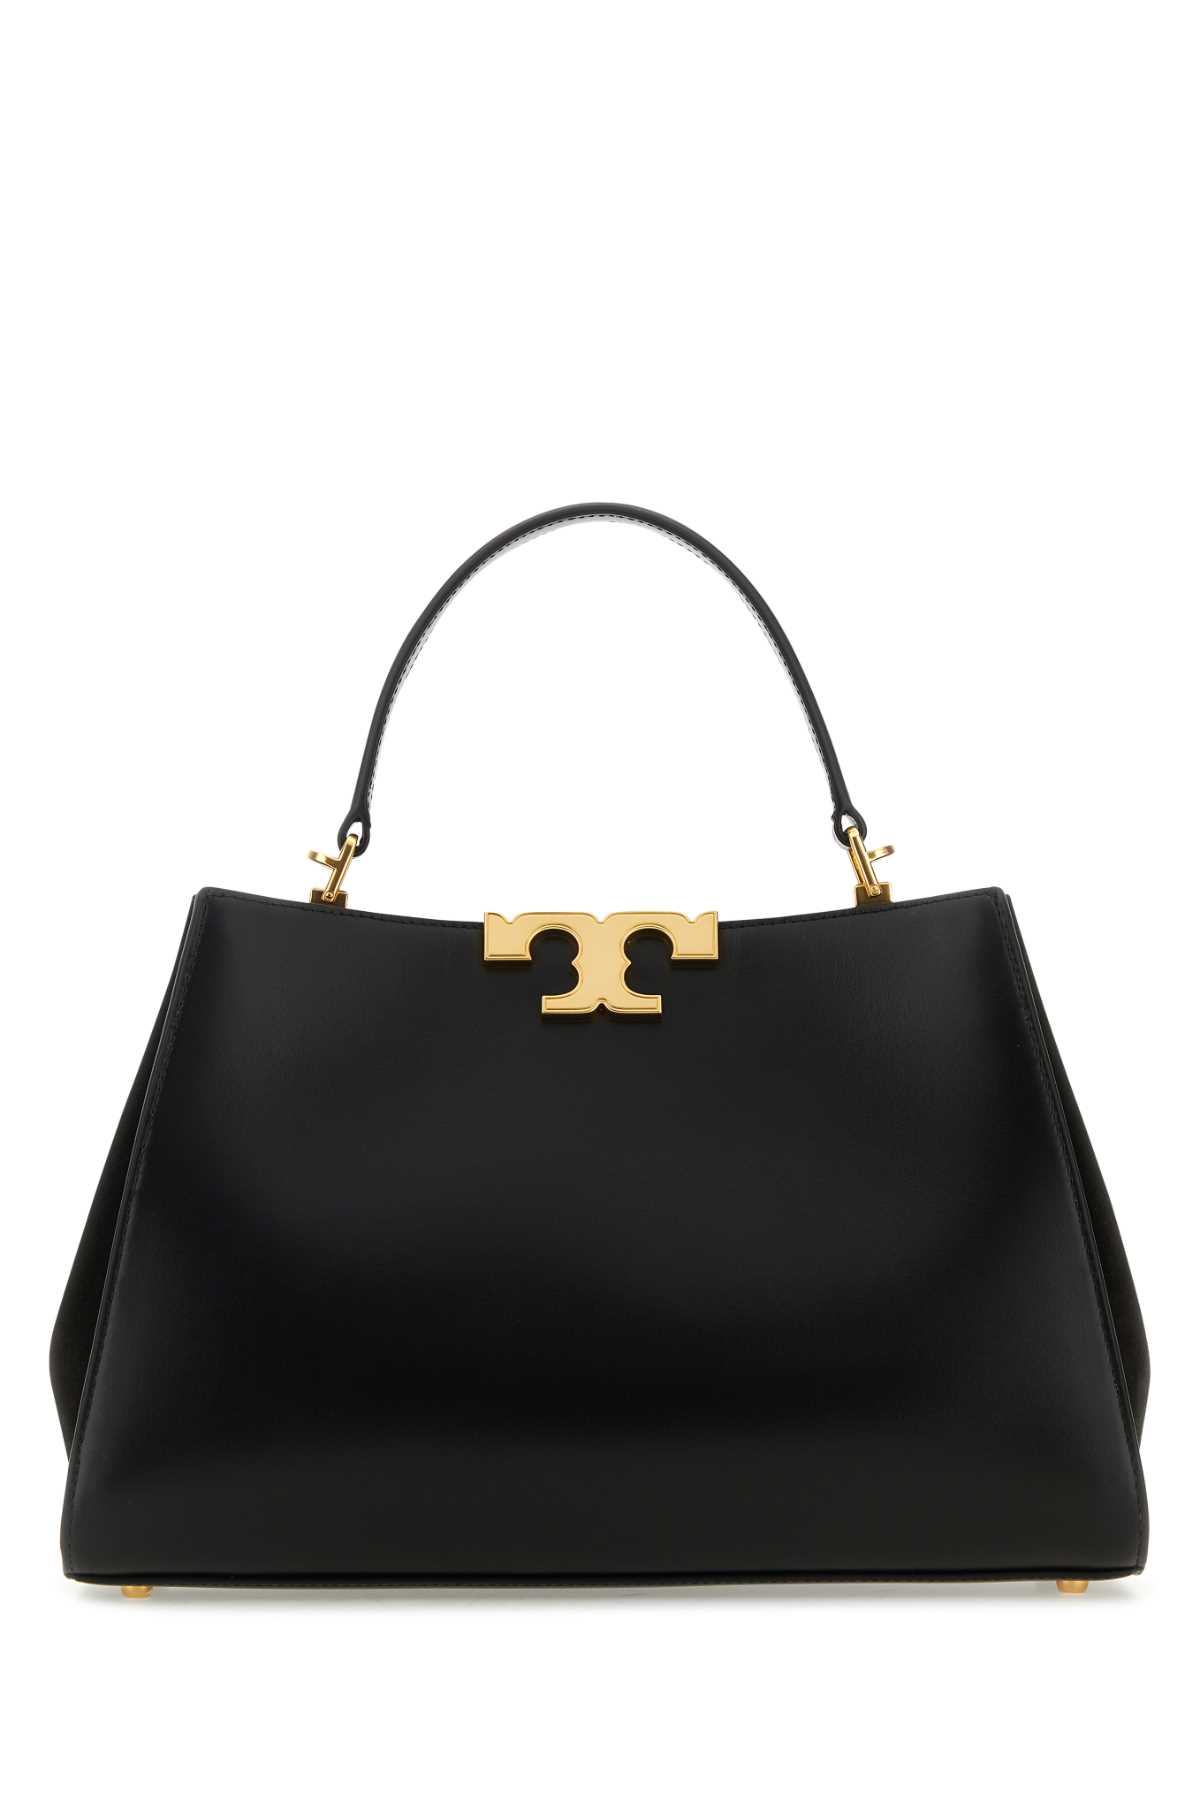 Shop Tory Burch Black Leather Eleanor Handbag